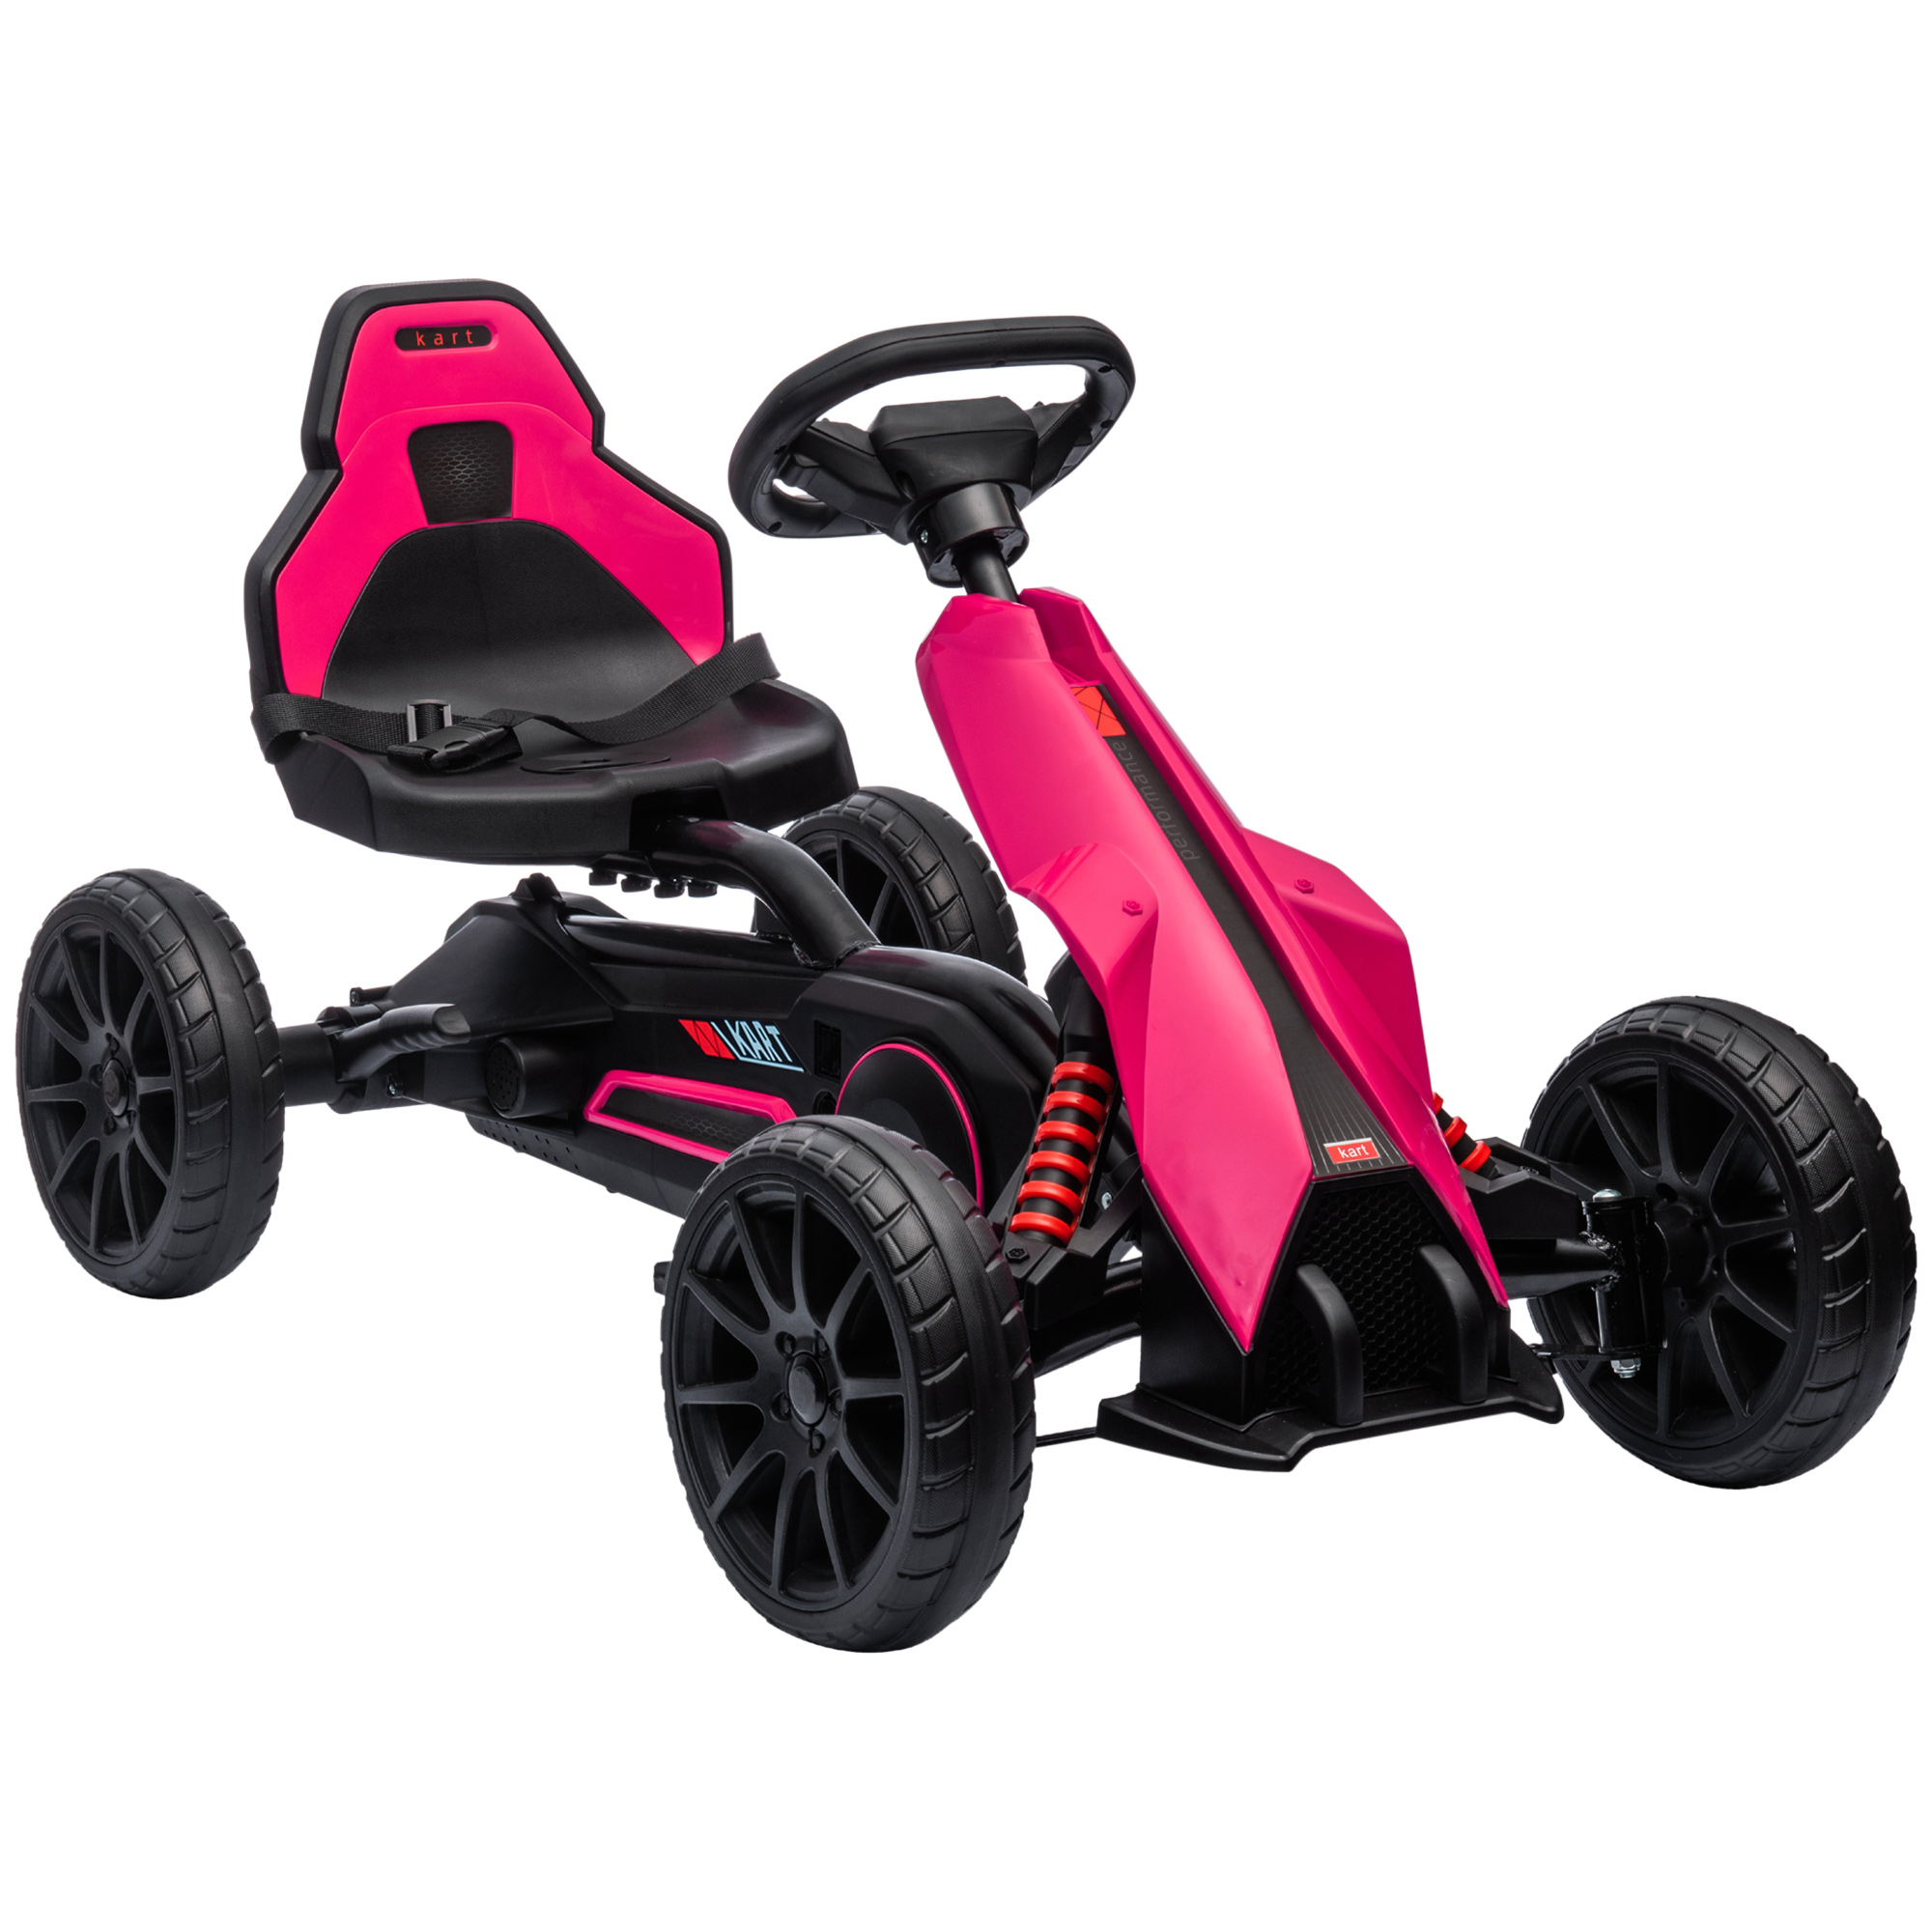 Homcom Children Pedal Go Kart, Kids Ride On Racer W/ Adjustable Seat, Shock Absorption Eva Tyres, Handbrake, For Kids Aged 3-8 Years Old, Pink